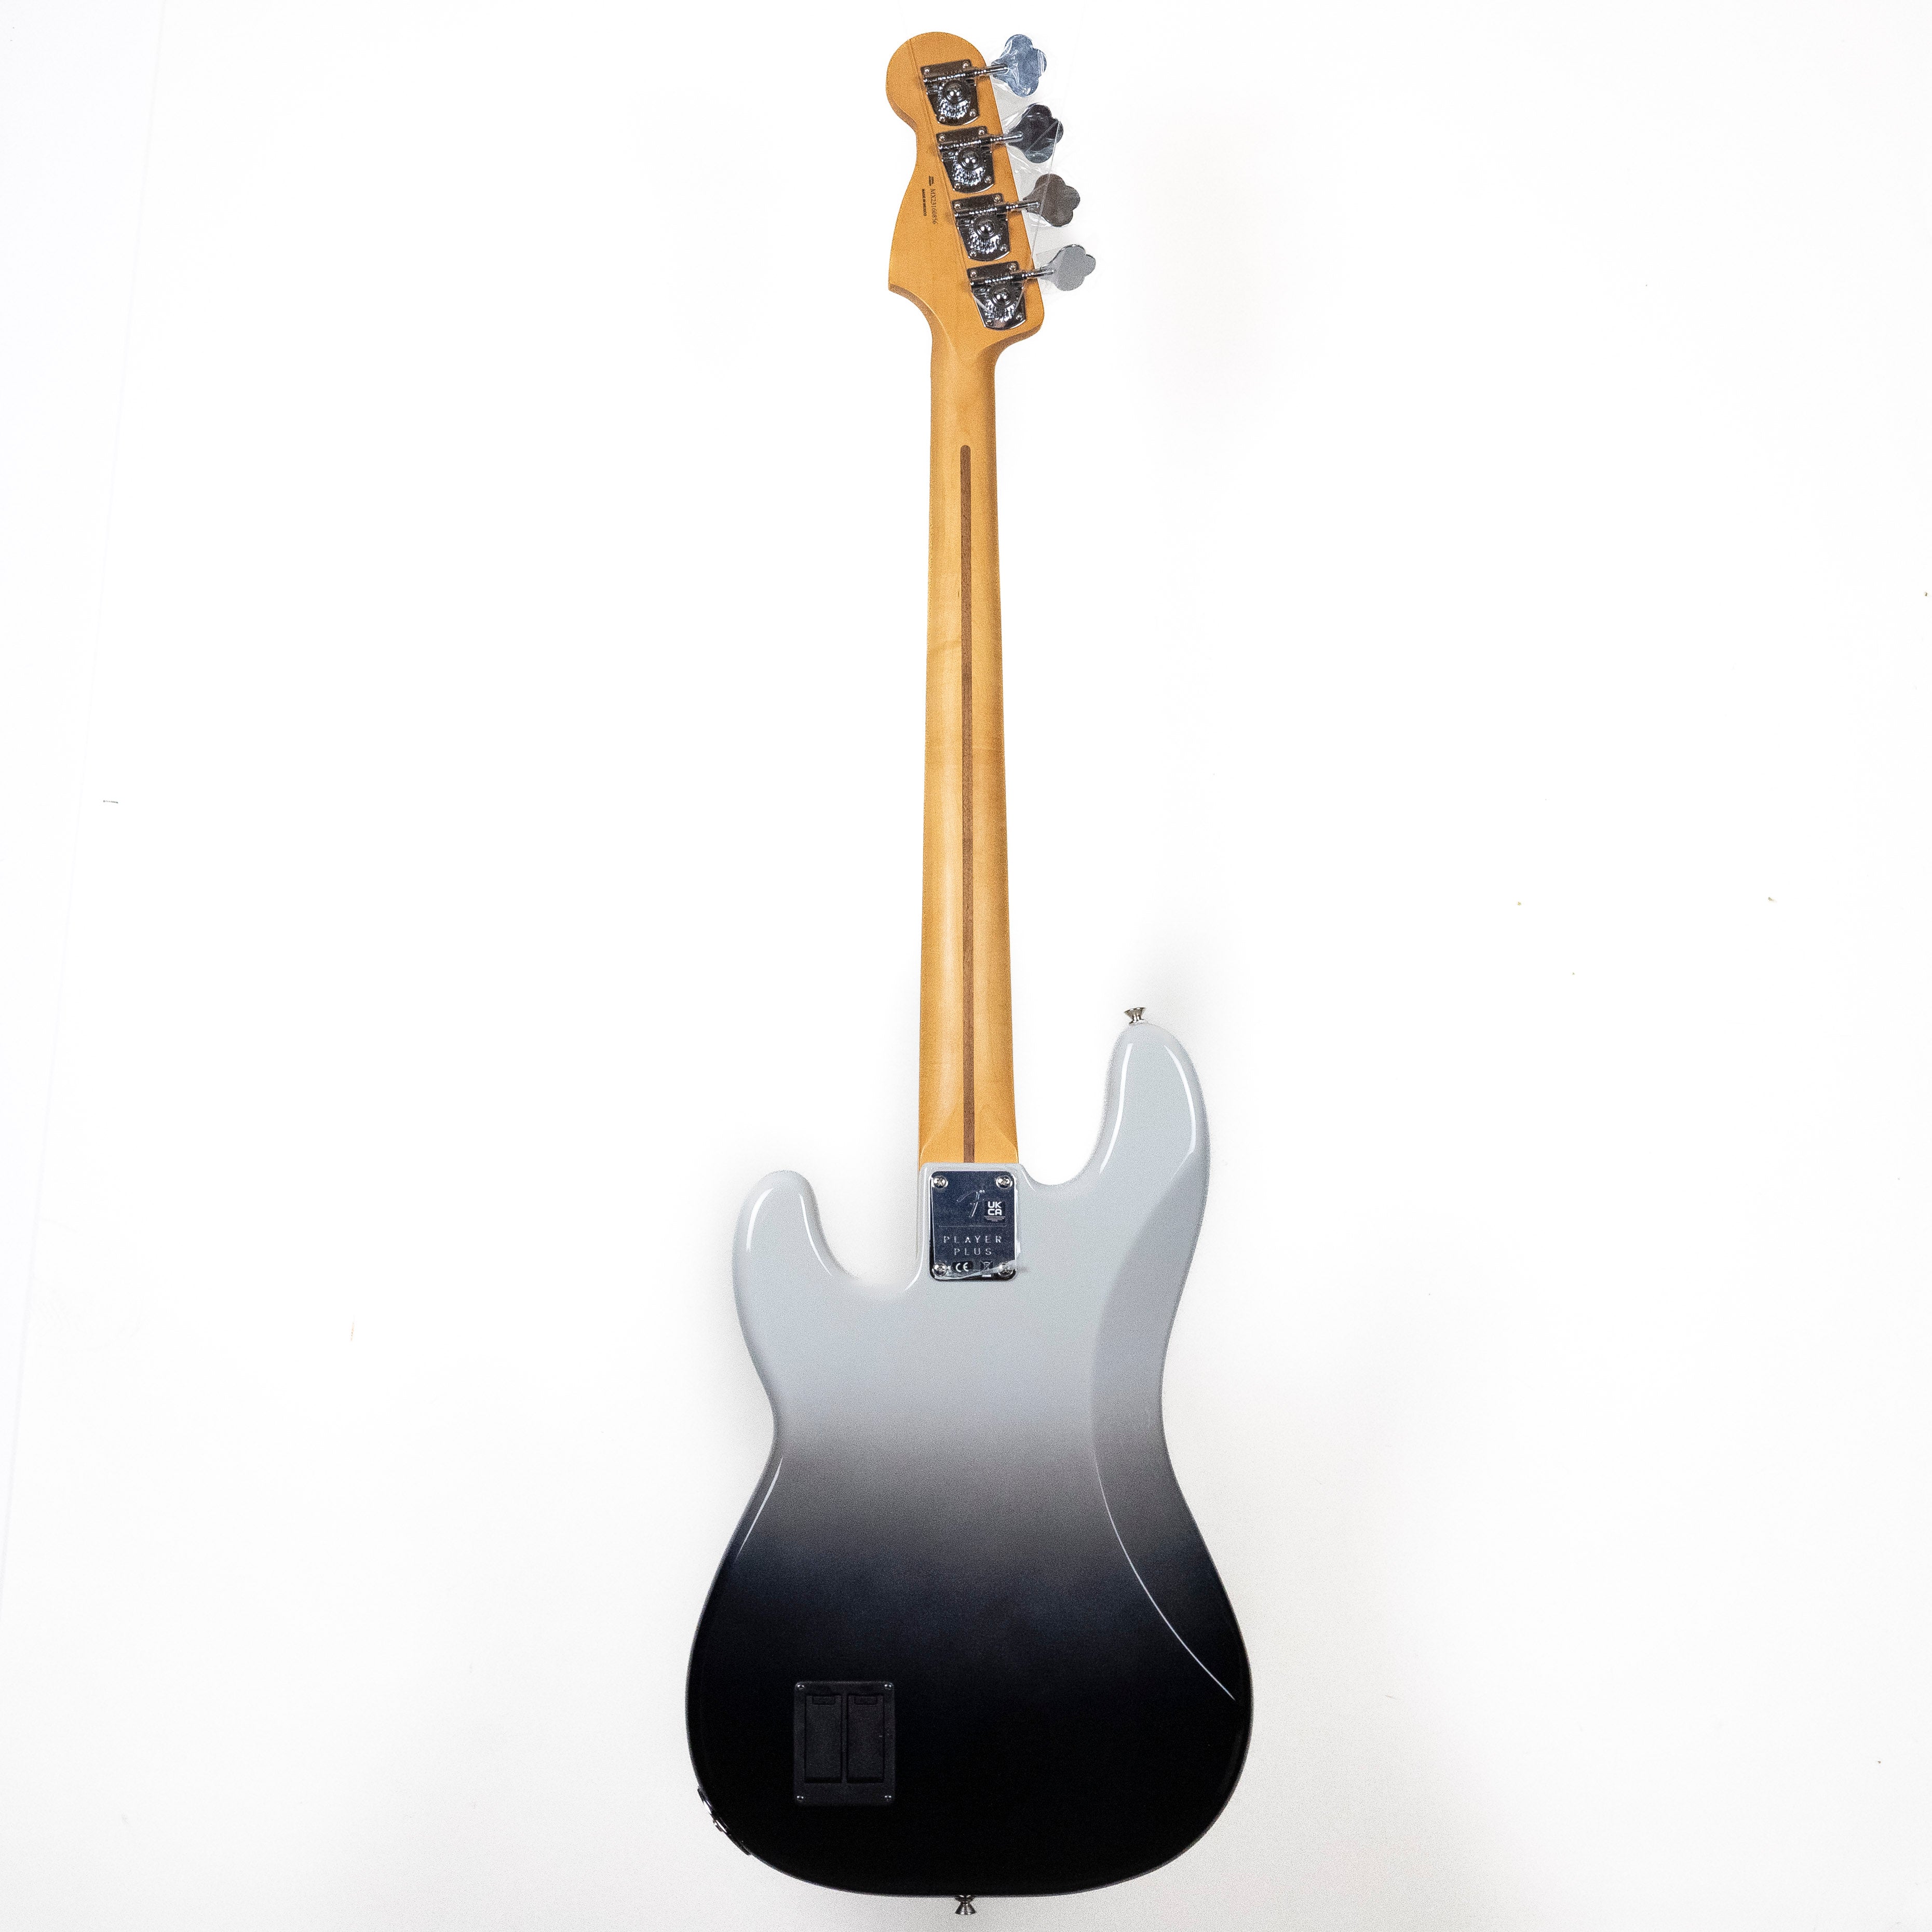 Fender Player Plus Precision Bass, Silver Smoke